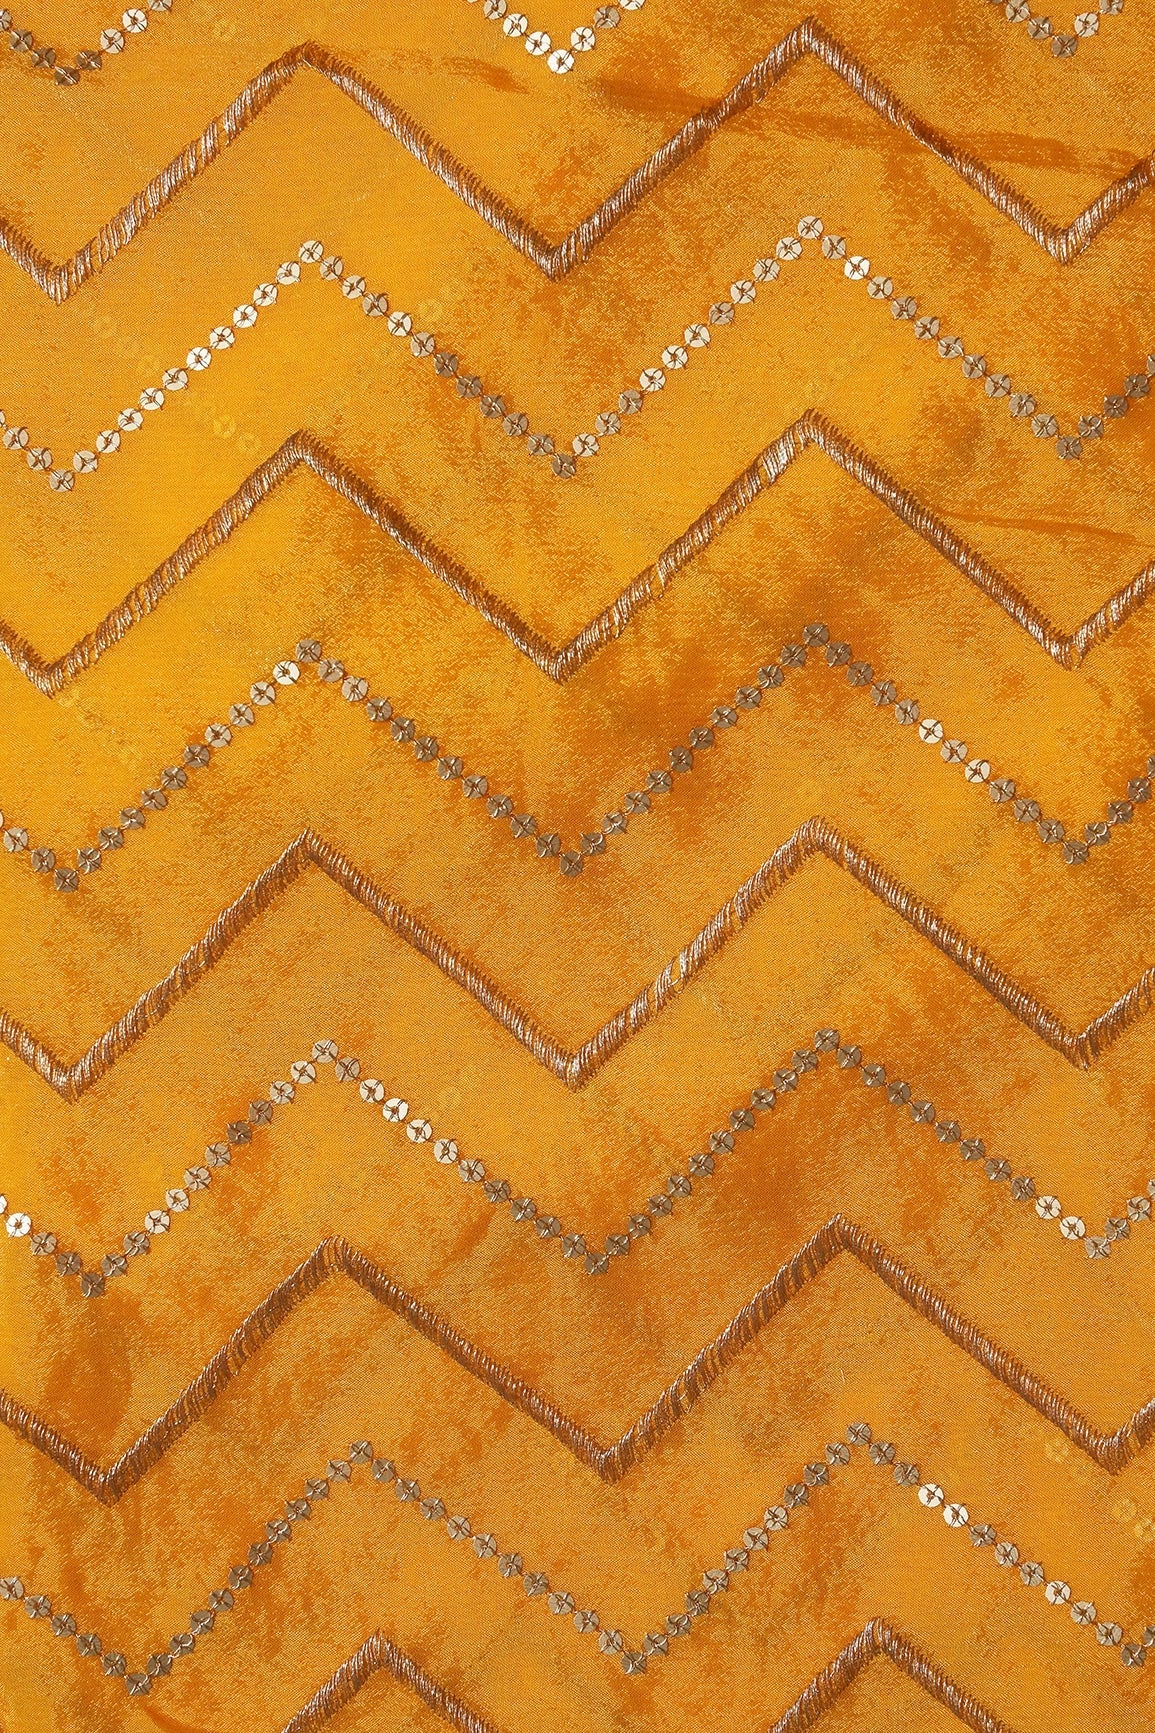 Gold Zari With Gold Sequins Chevron Embroidery Work On Yellow Chinnon Chiffon Fabric - doeraa